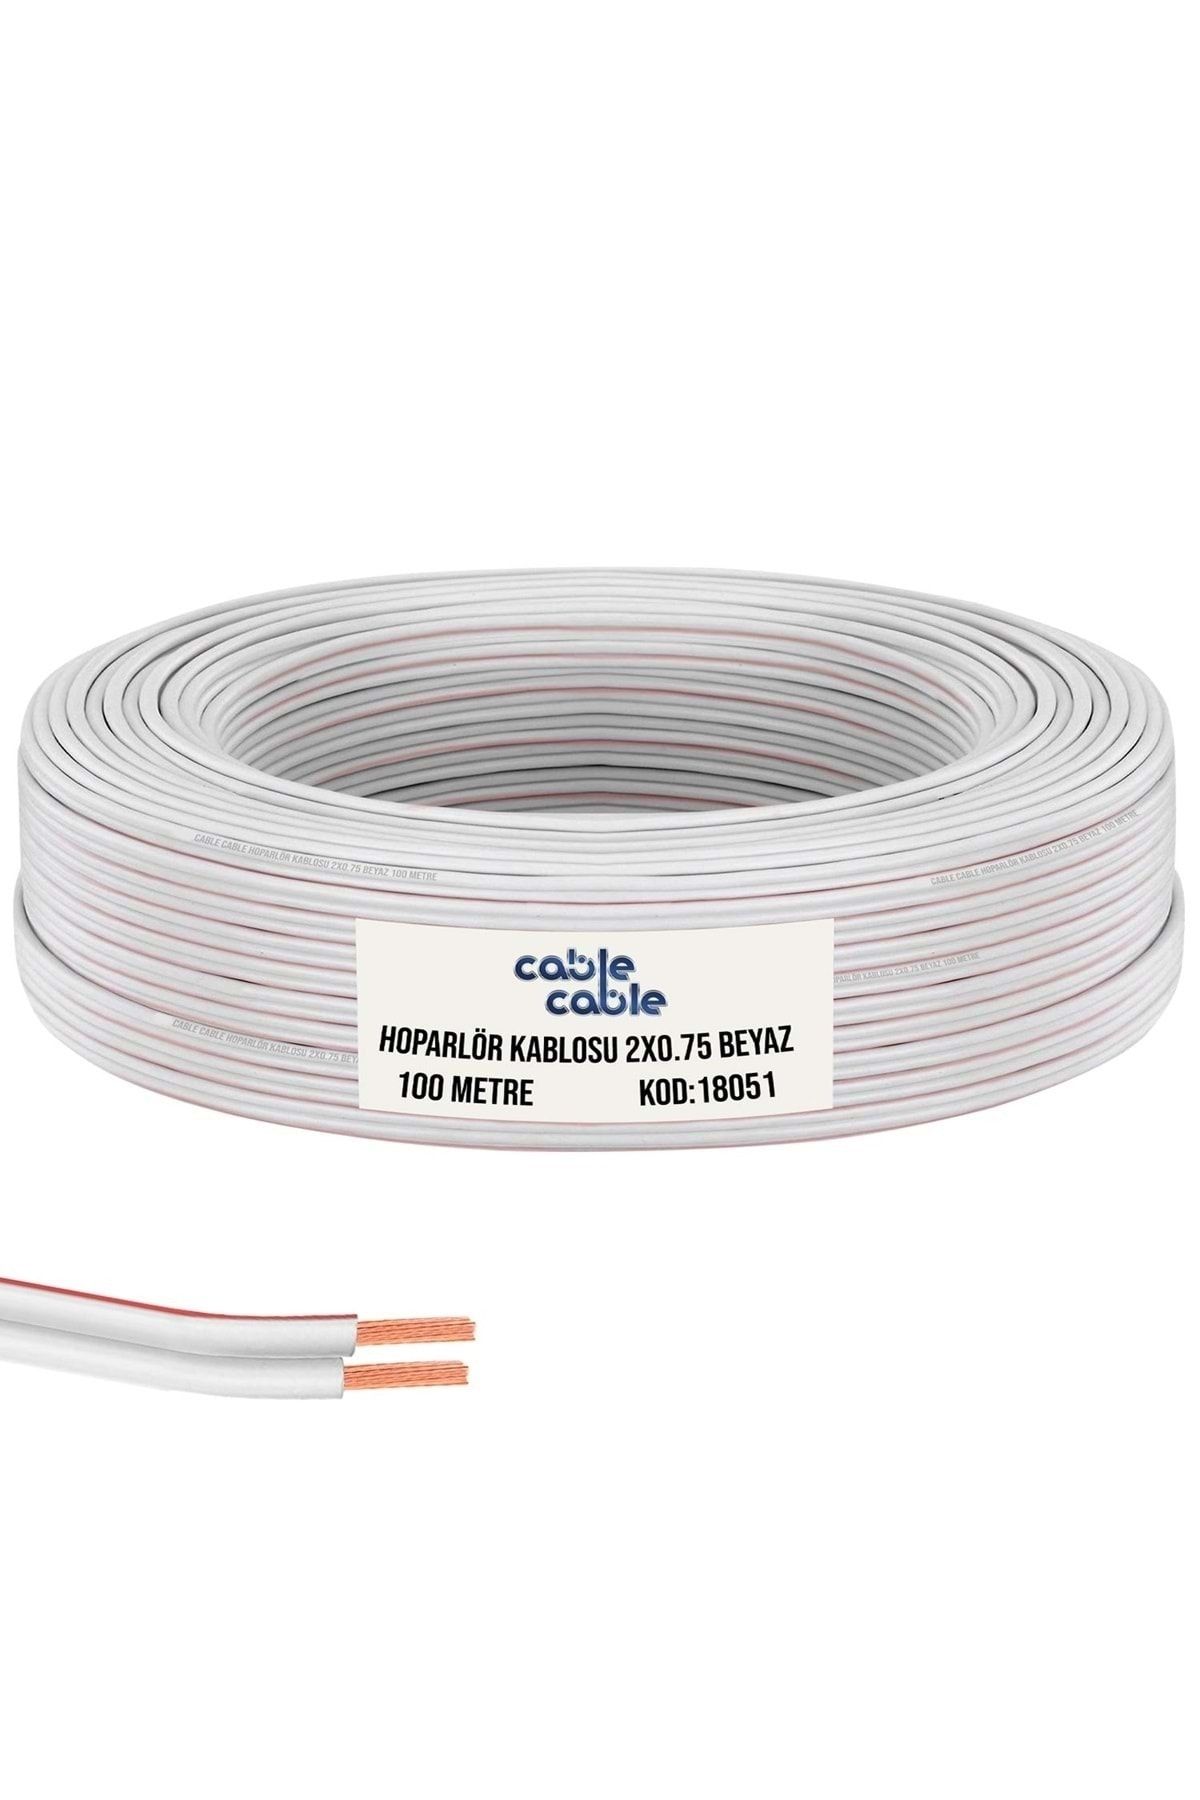 cable cable Elektrik Kablosu Kordon 2x0.75 Beyaz 100mt